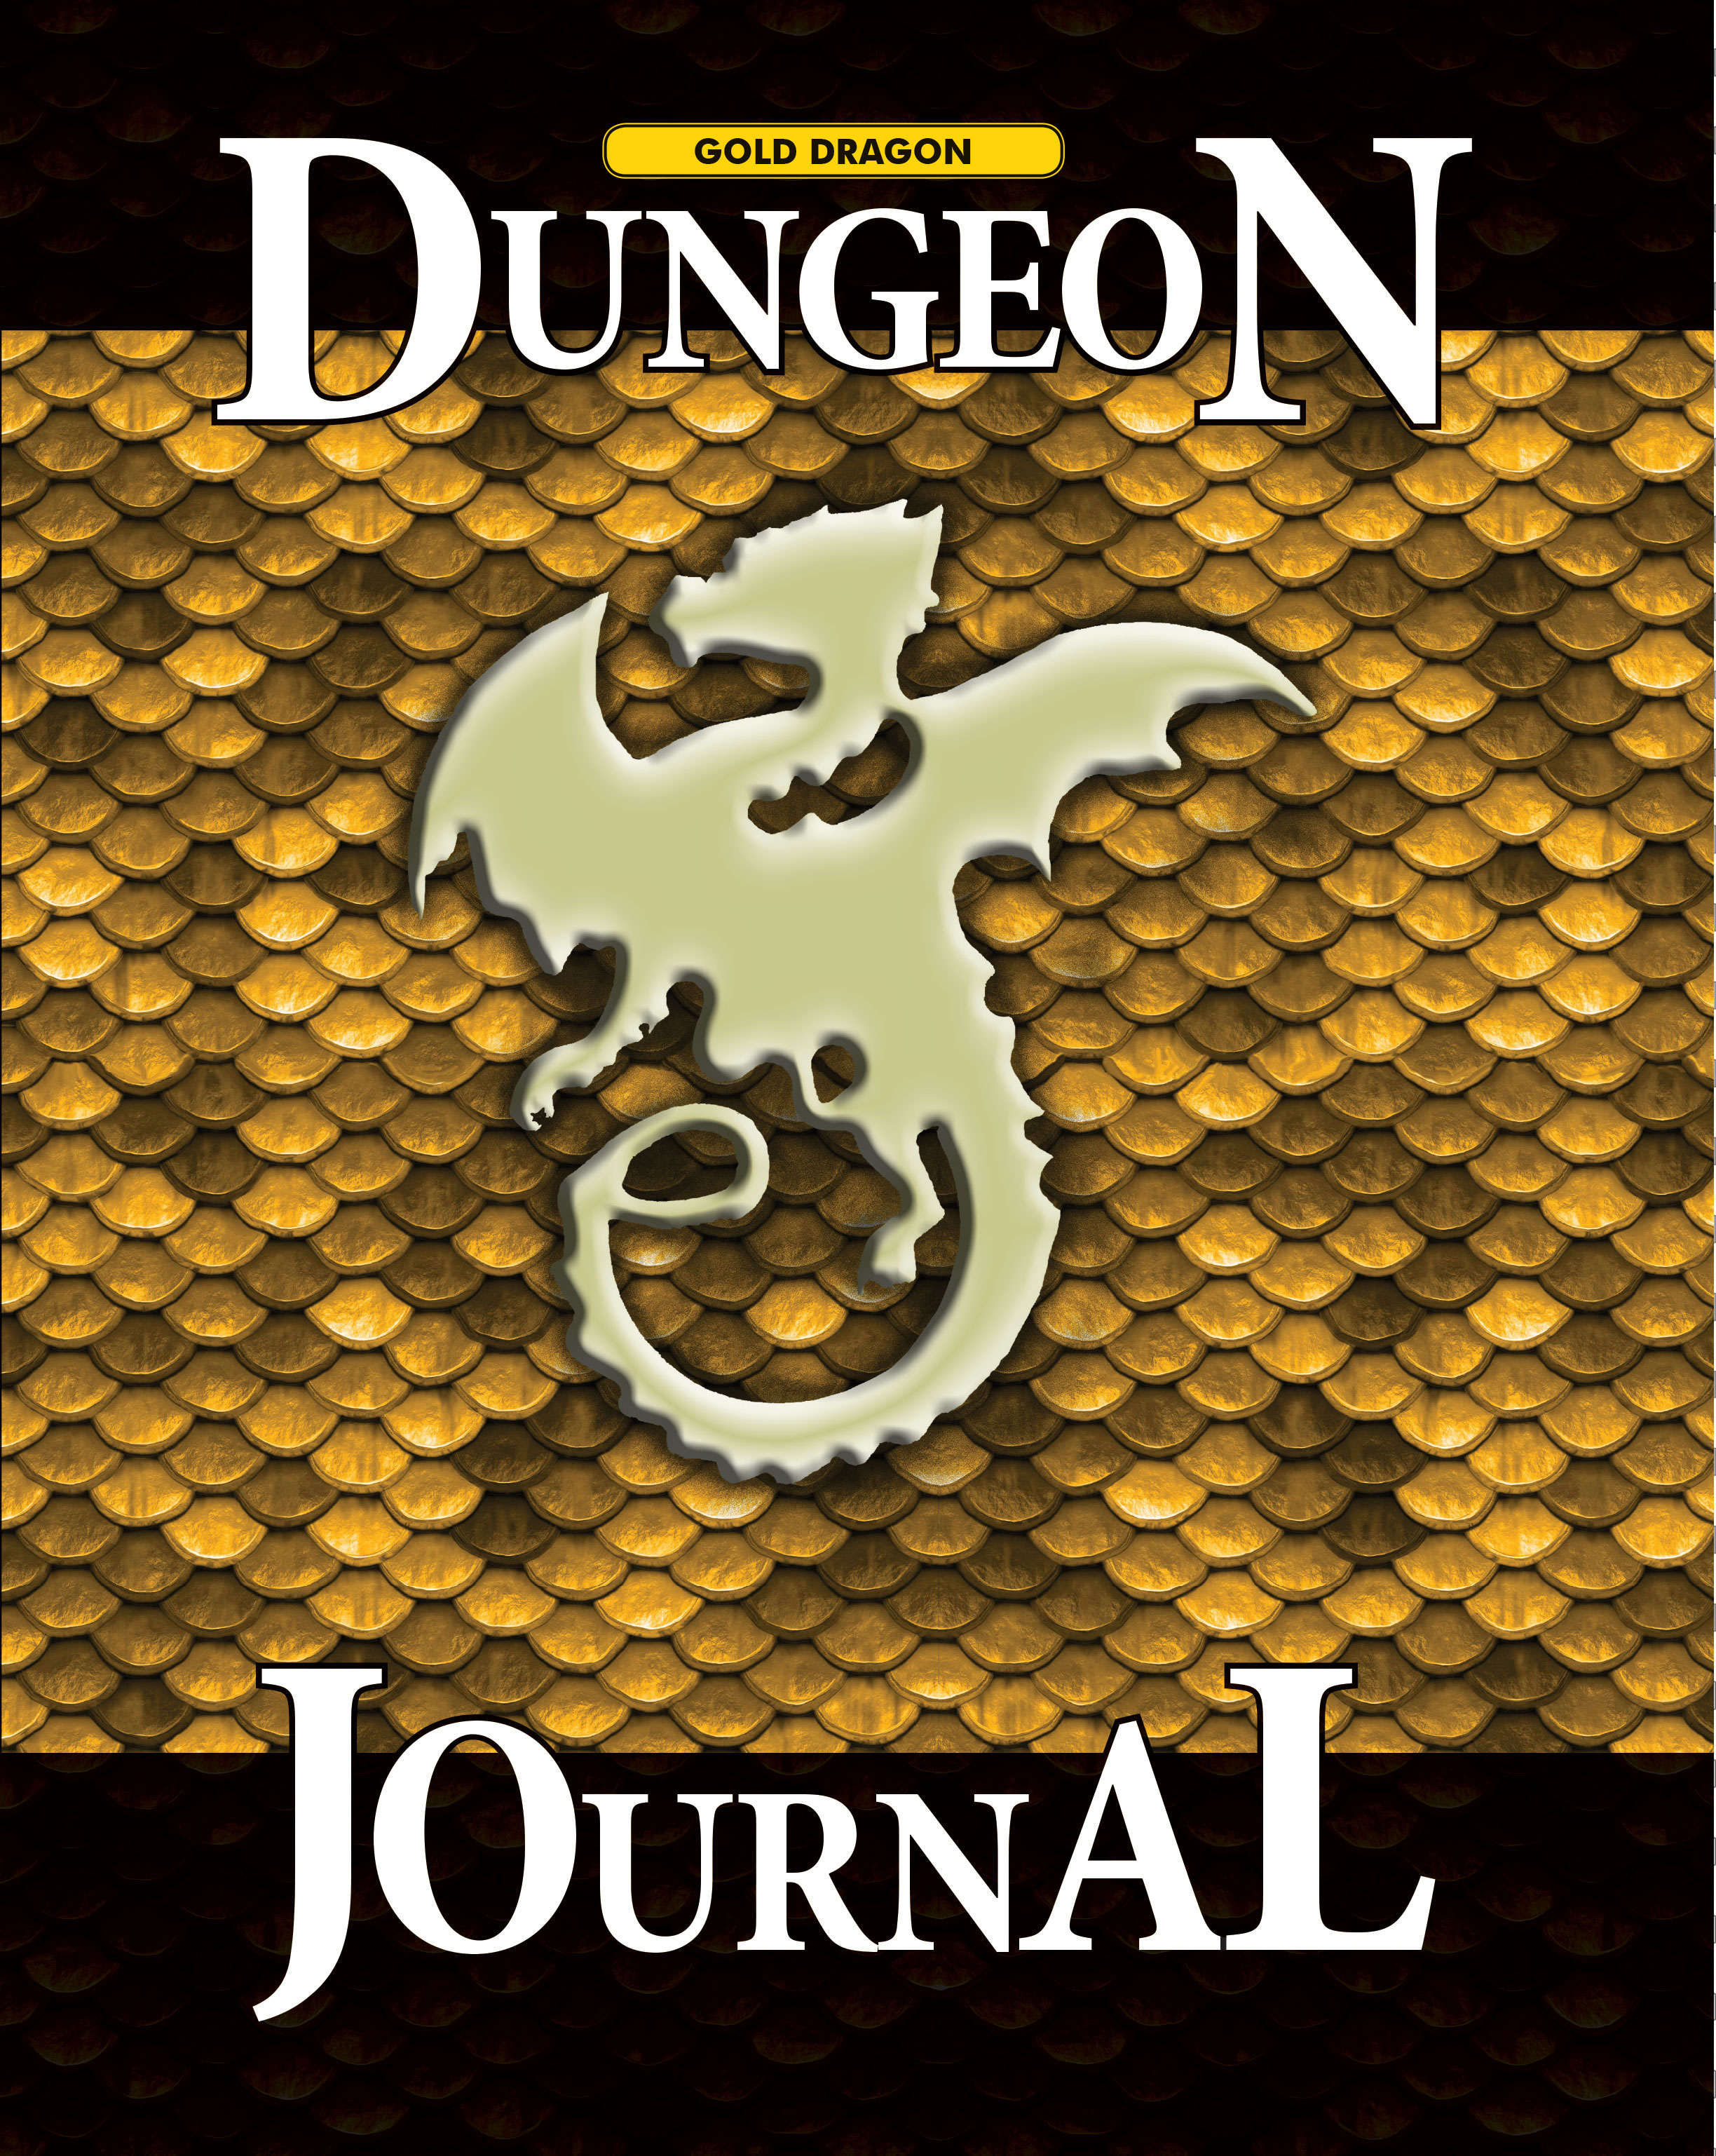 Gold Dragon Dungeon Journal